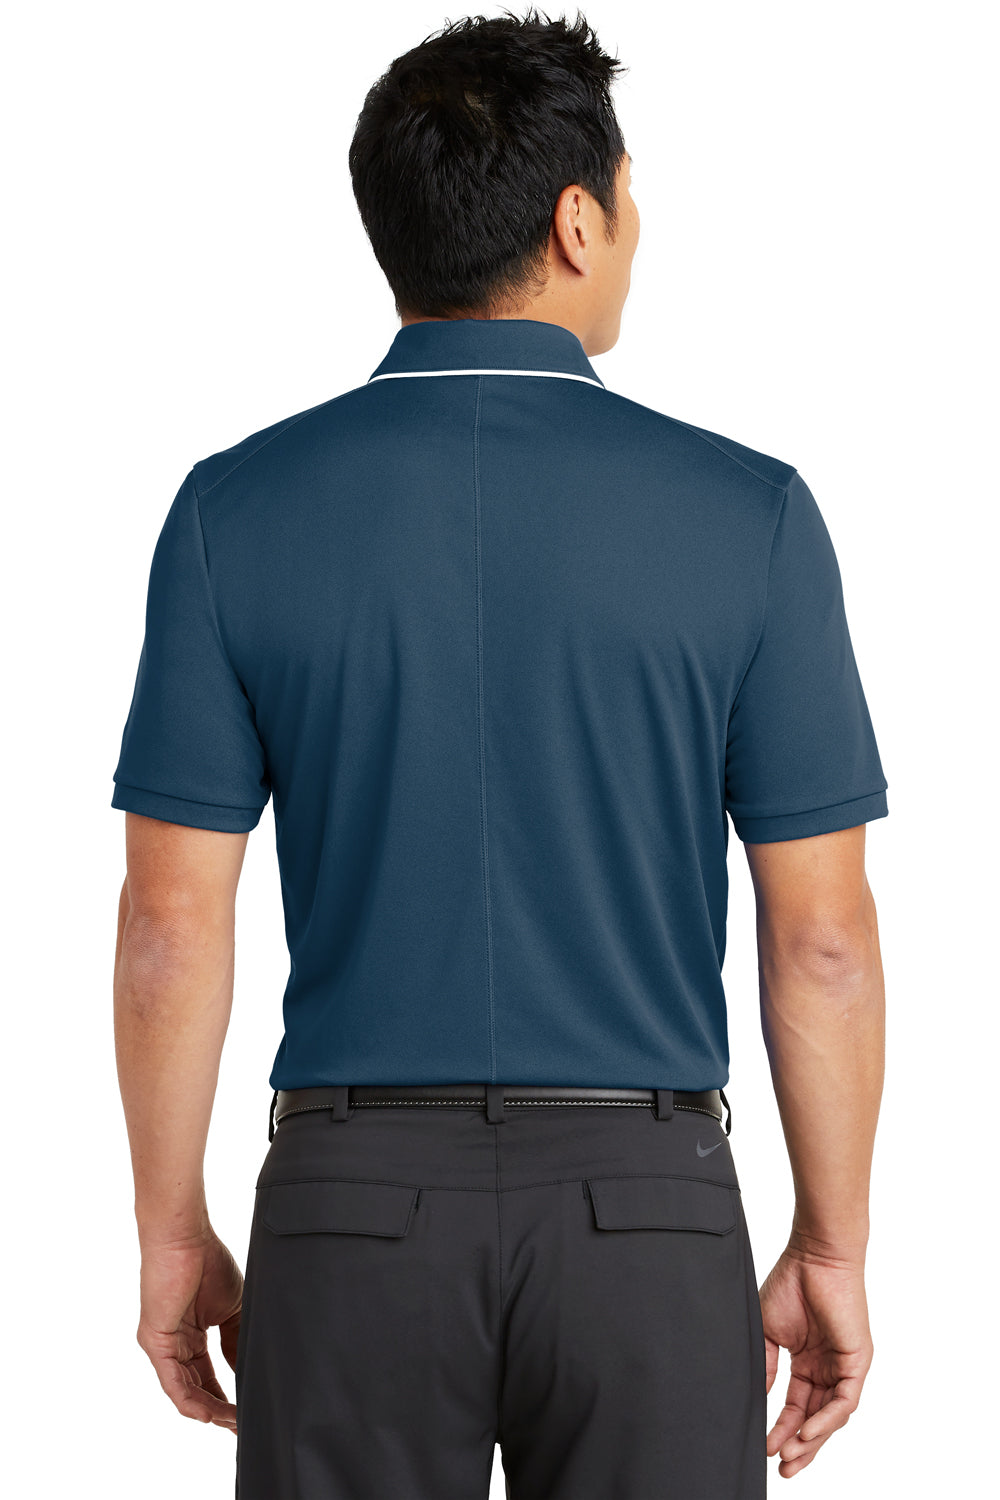 Nike NKAA1849 Mens Edge Dri-Fit Moisture Wicking Short Sleeve Polo Shirt Navy Blue Back